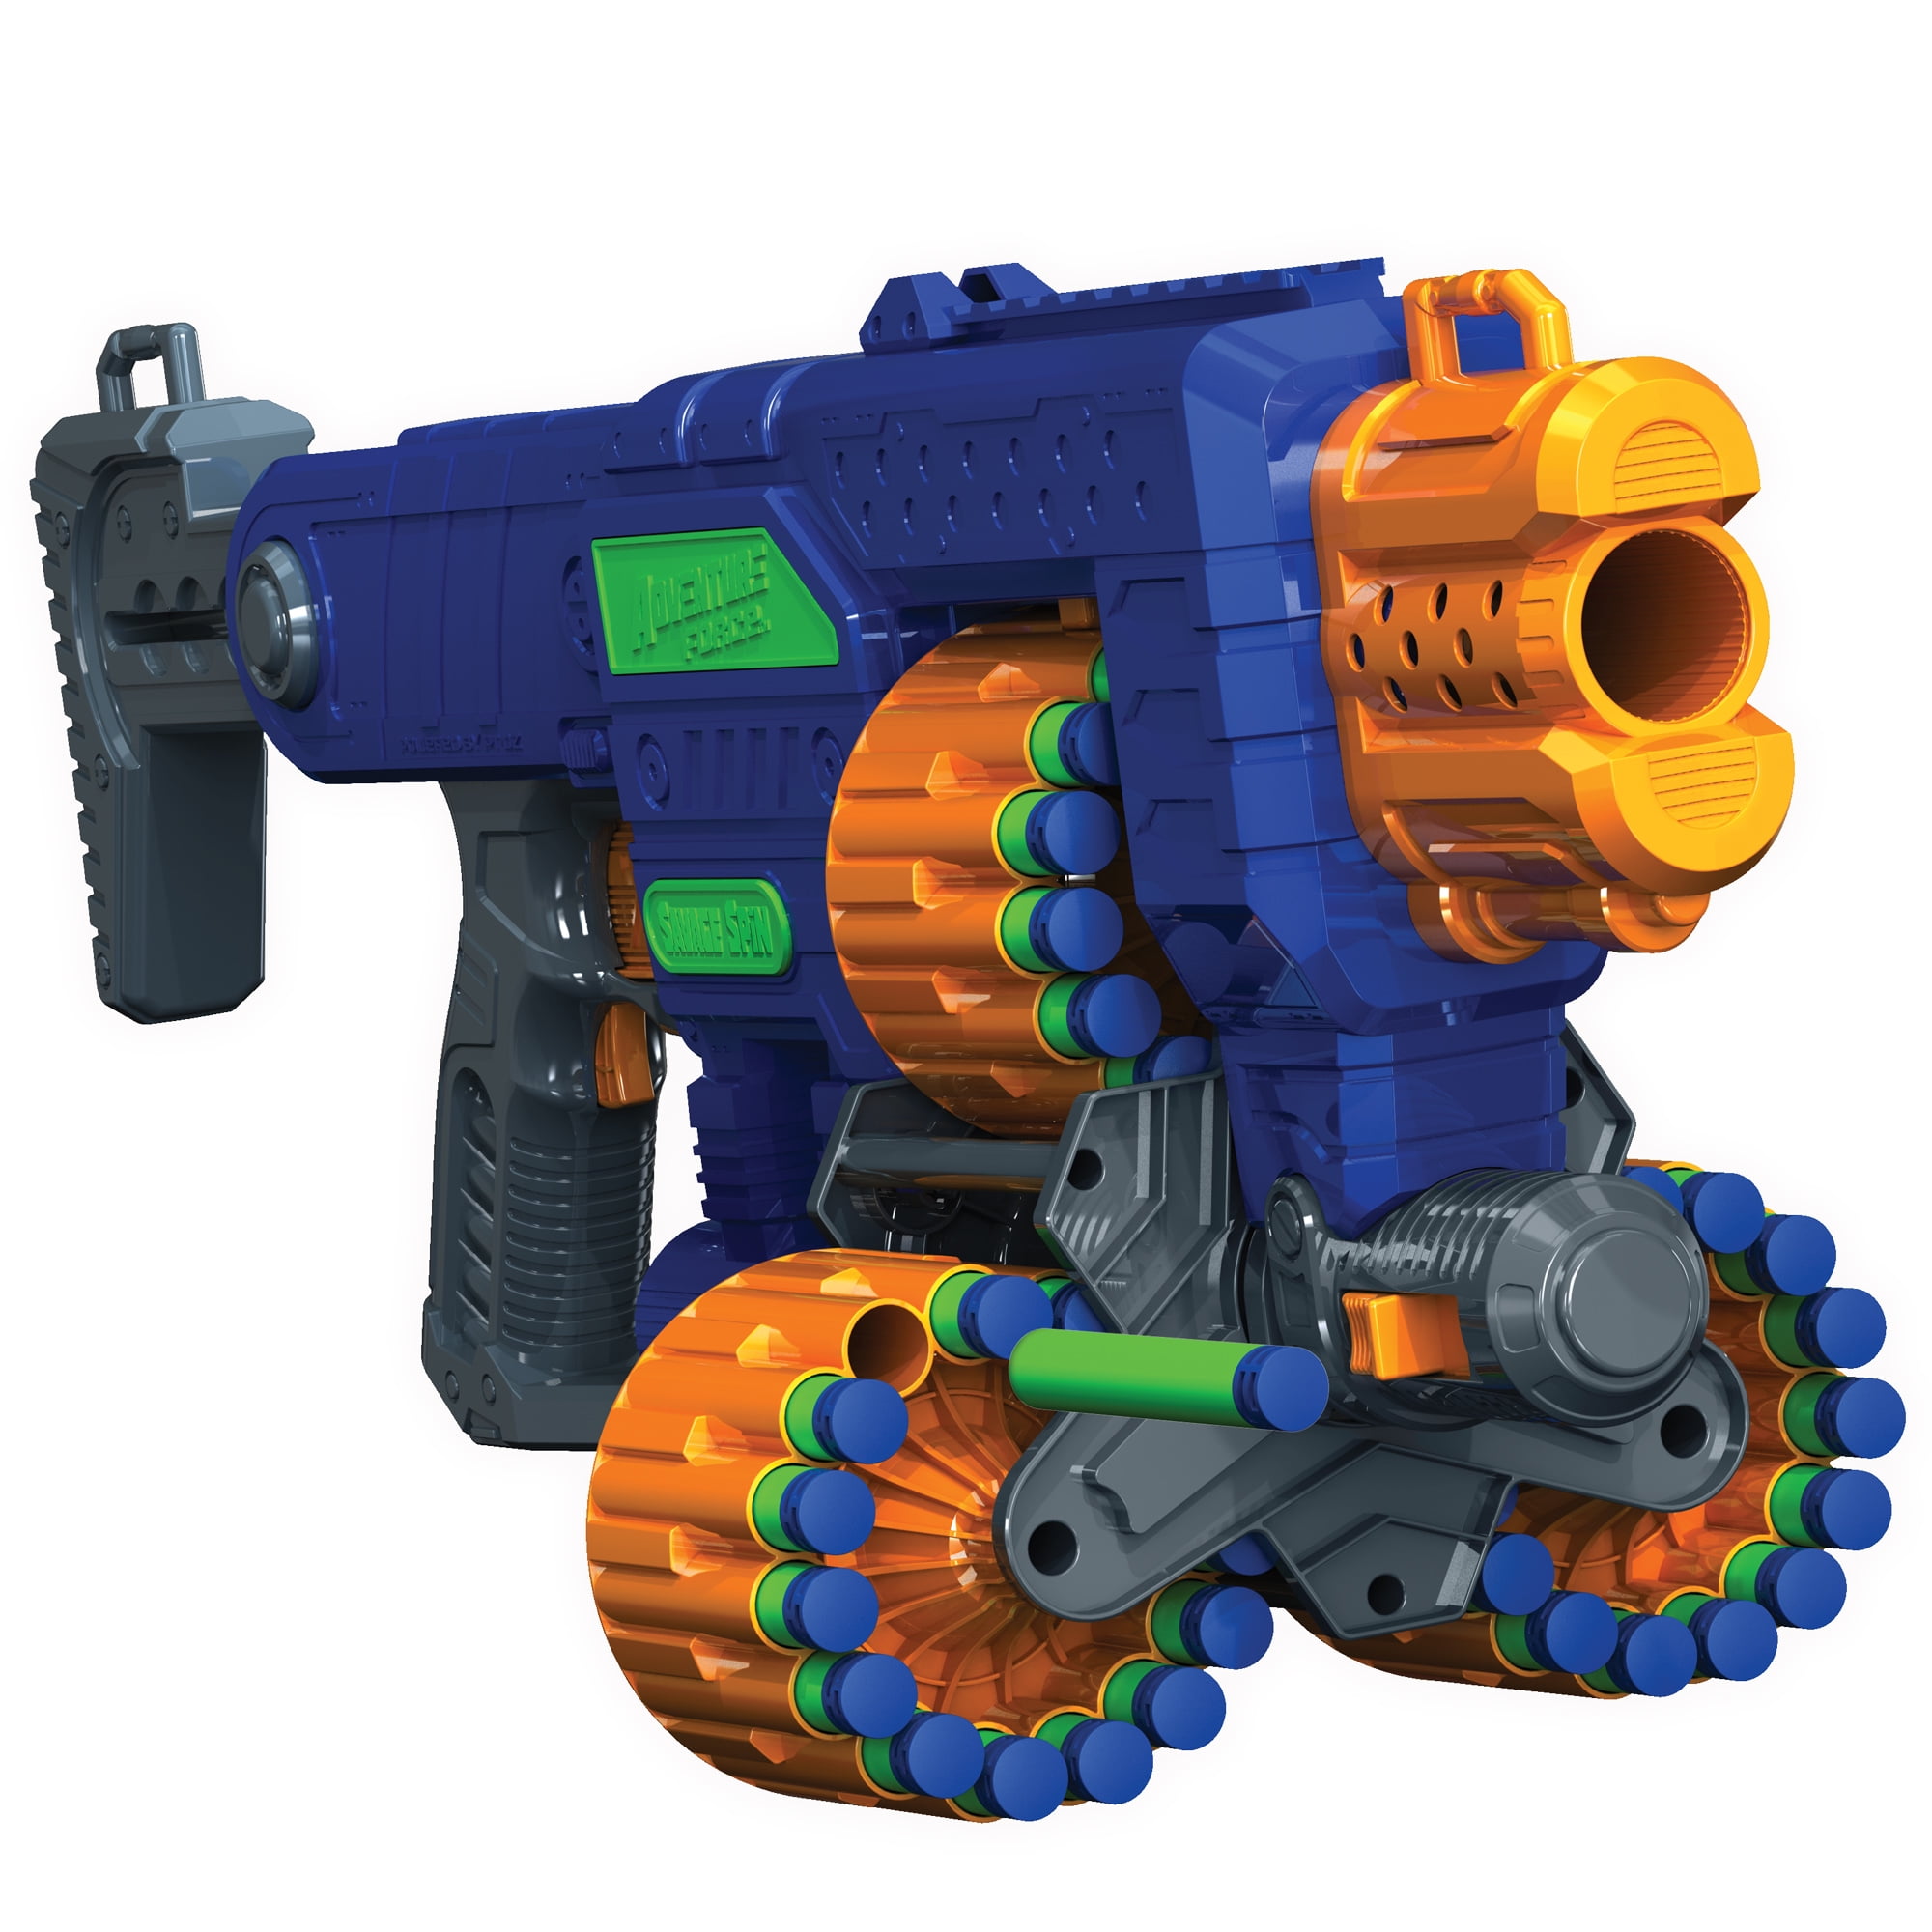 Spin blaster. Бластер ультра. Пулемет игрушка. Toy Gun Blaster. Adventure Force.